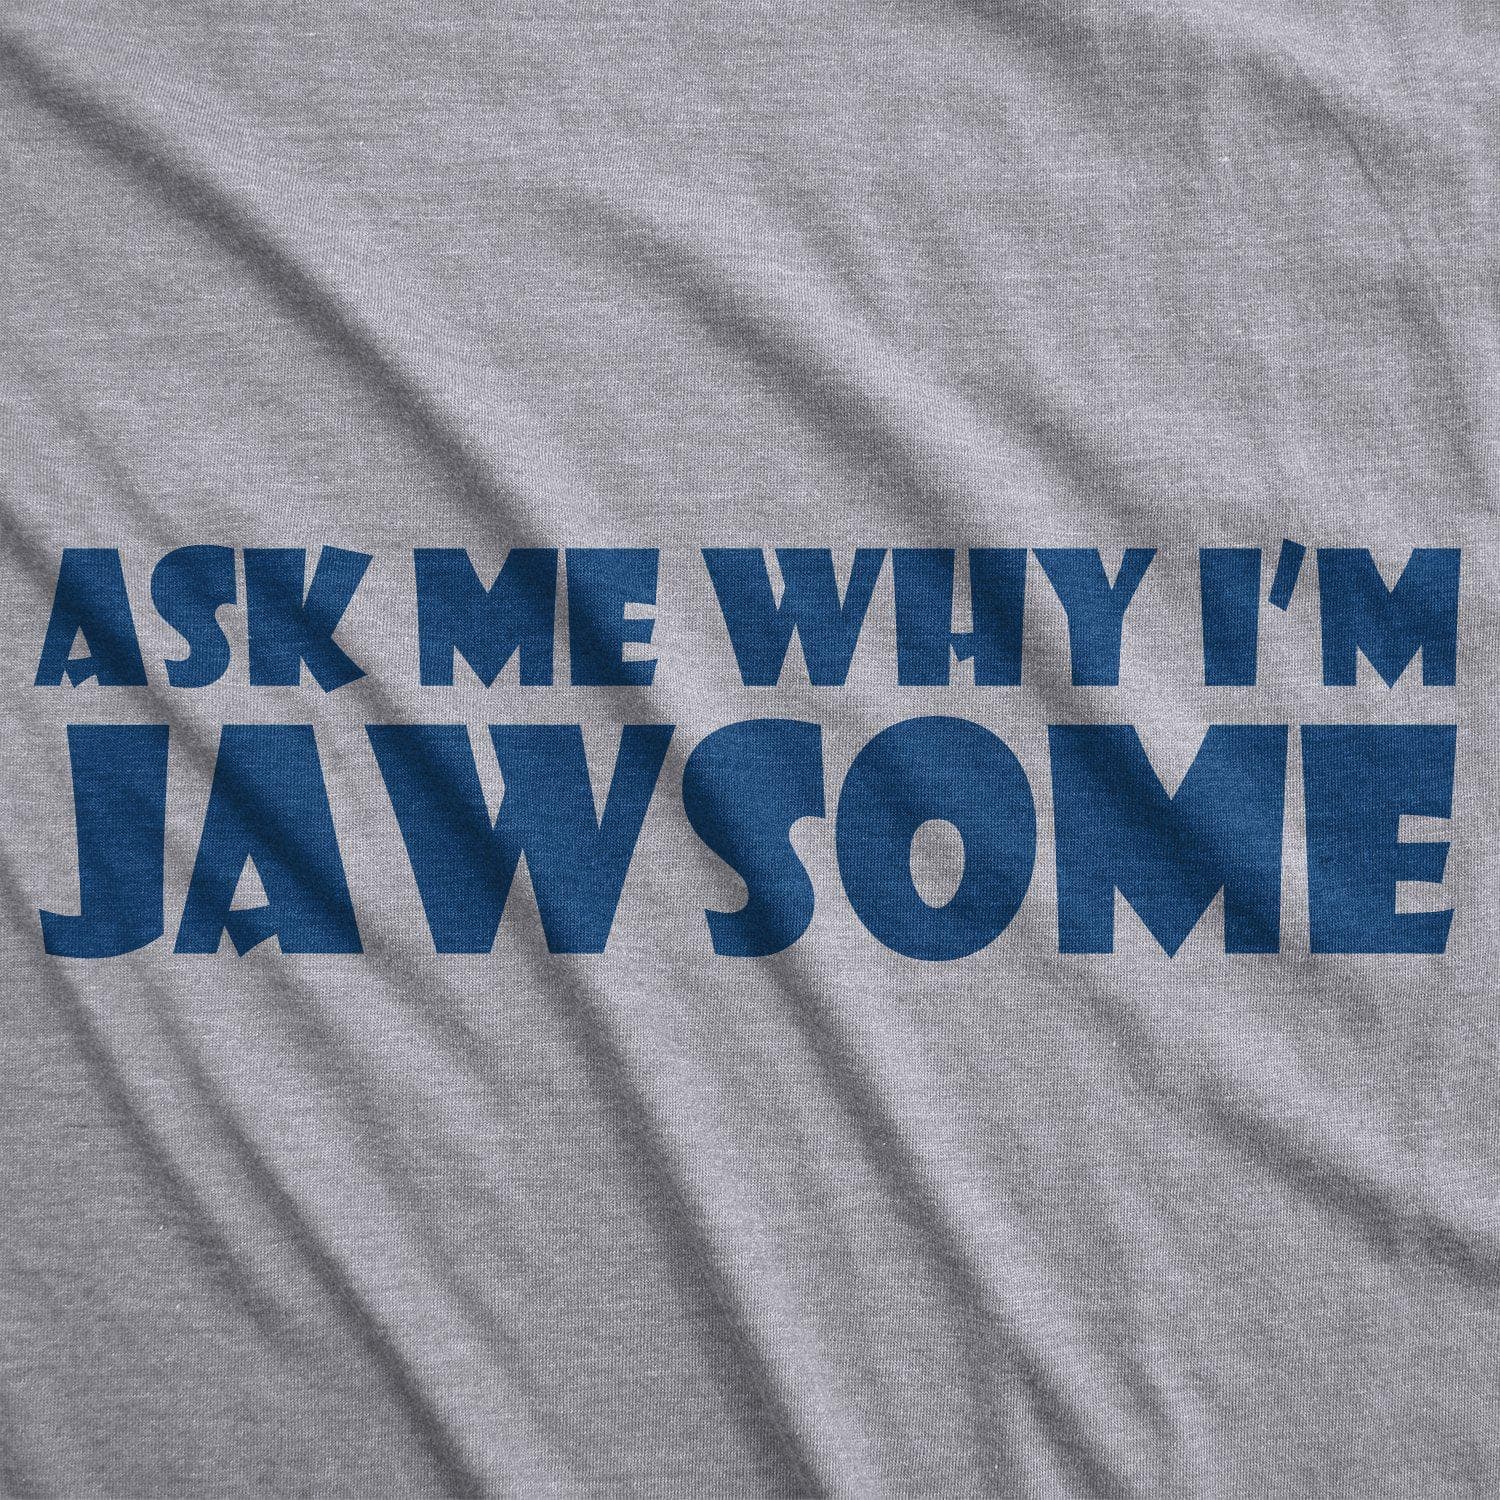 Ask Me Why I'm Jawsome Flip Youth Tshirt - Crazy Dog T-Shirts